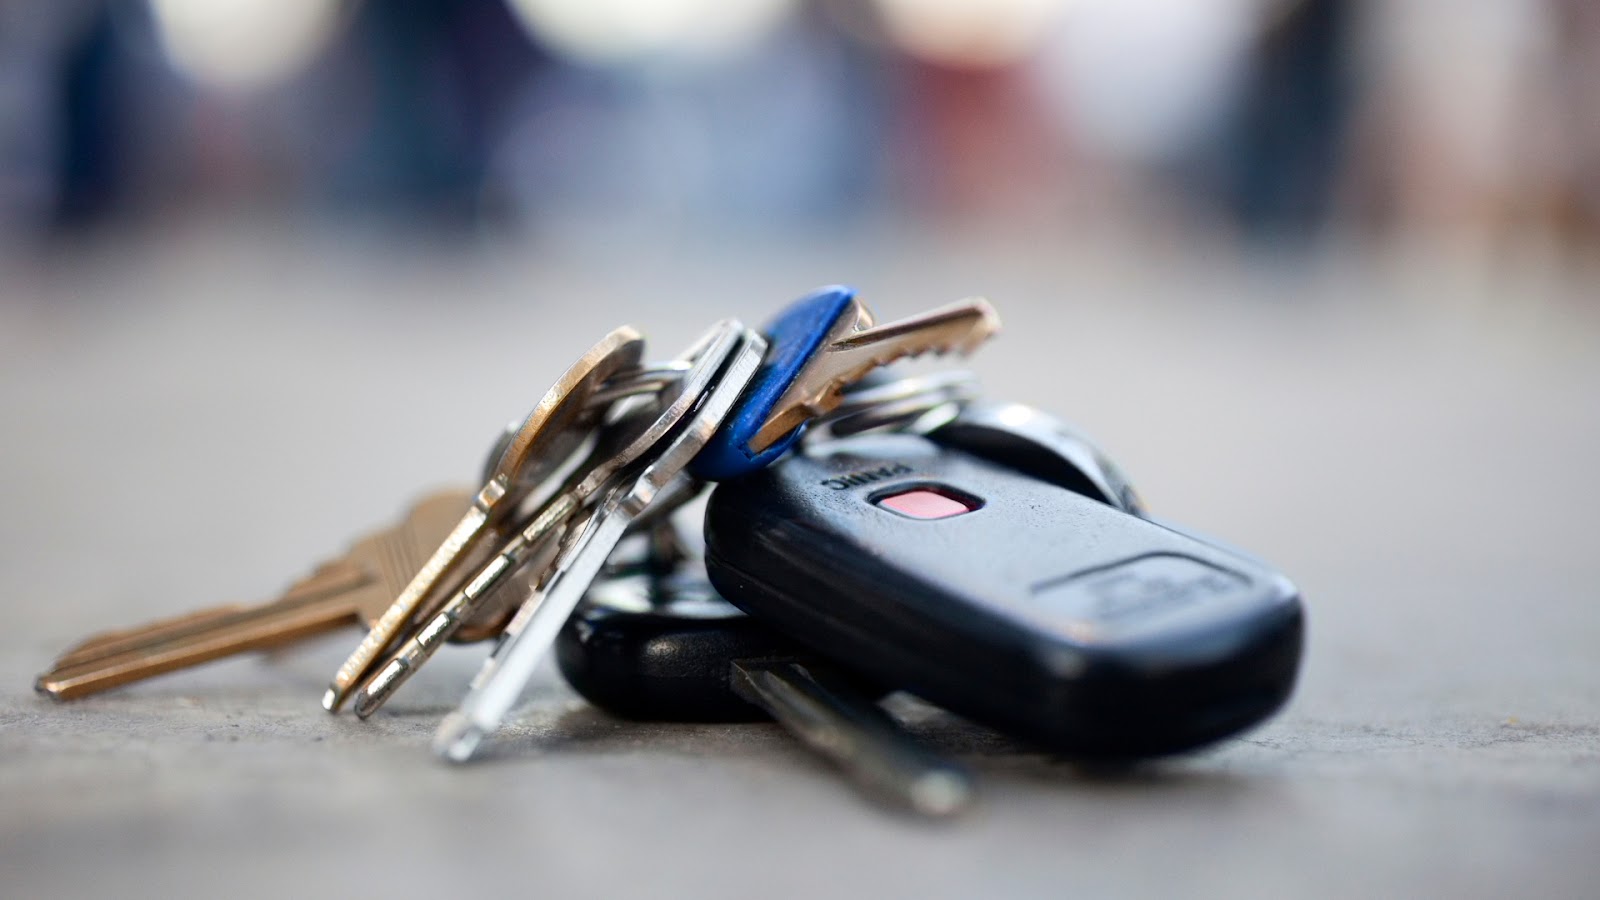 A set of keys that include a car key